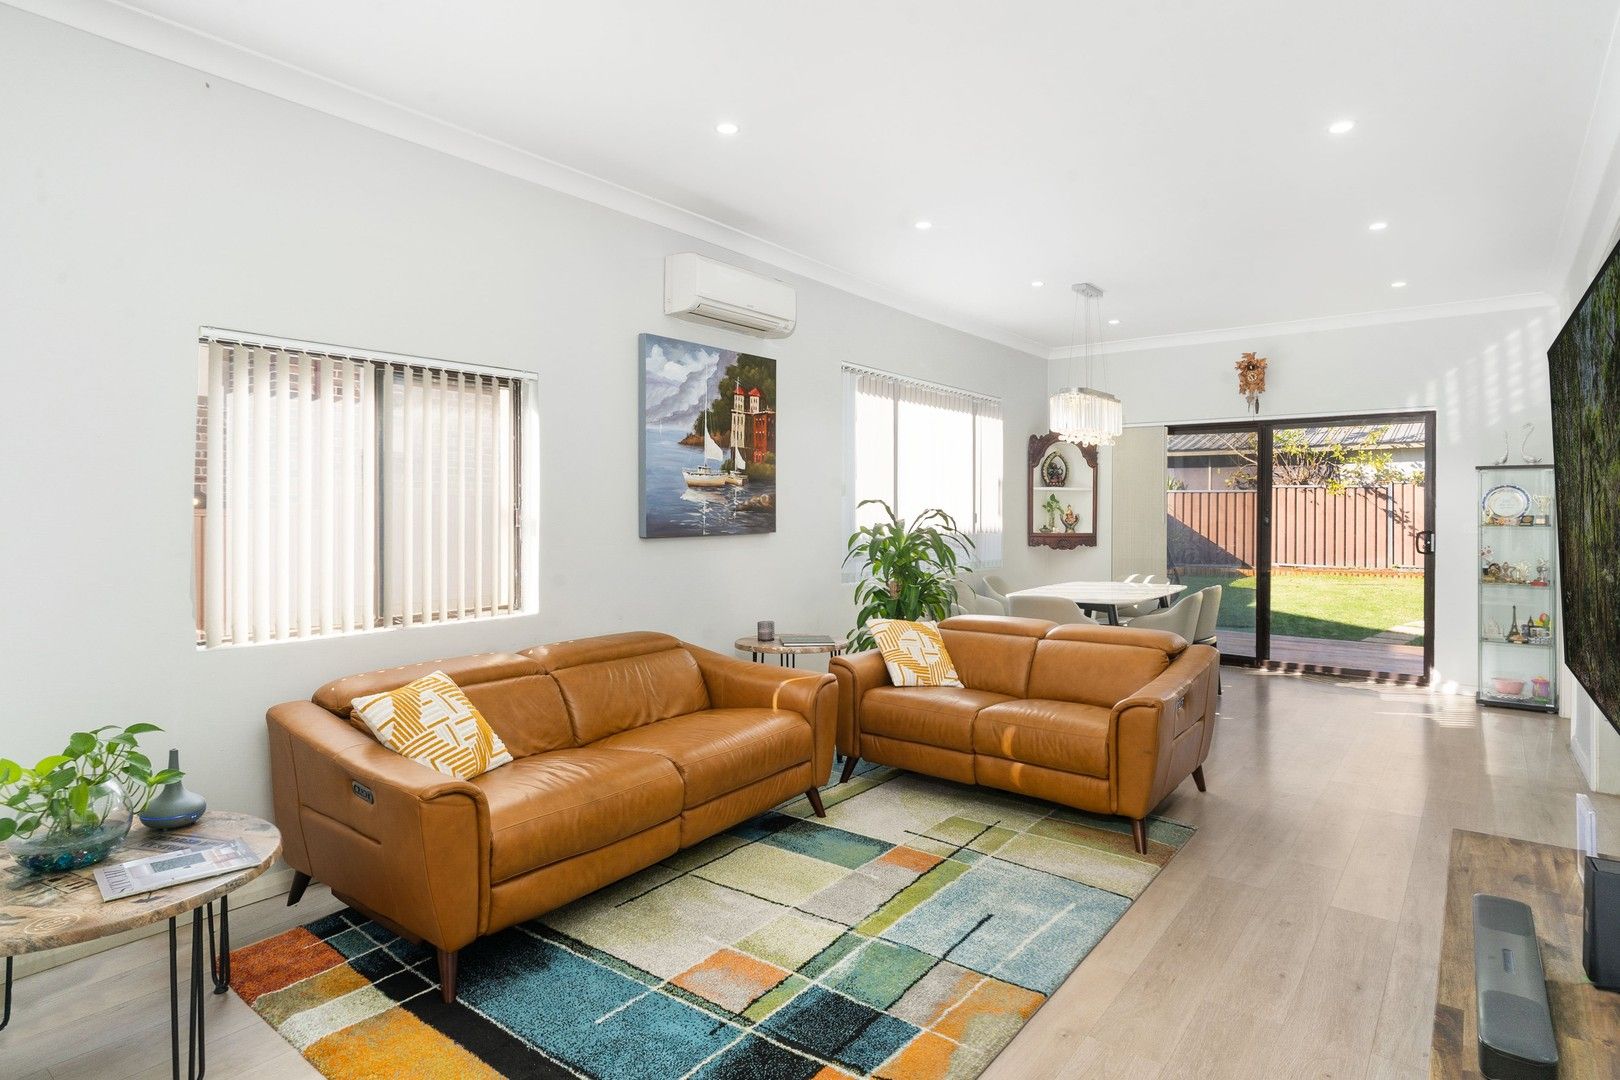 3 bedrooms House in 81 Caledonian Street BEXLEY NSW, 2207